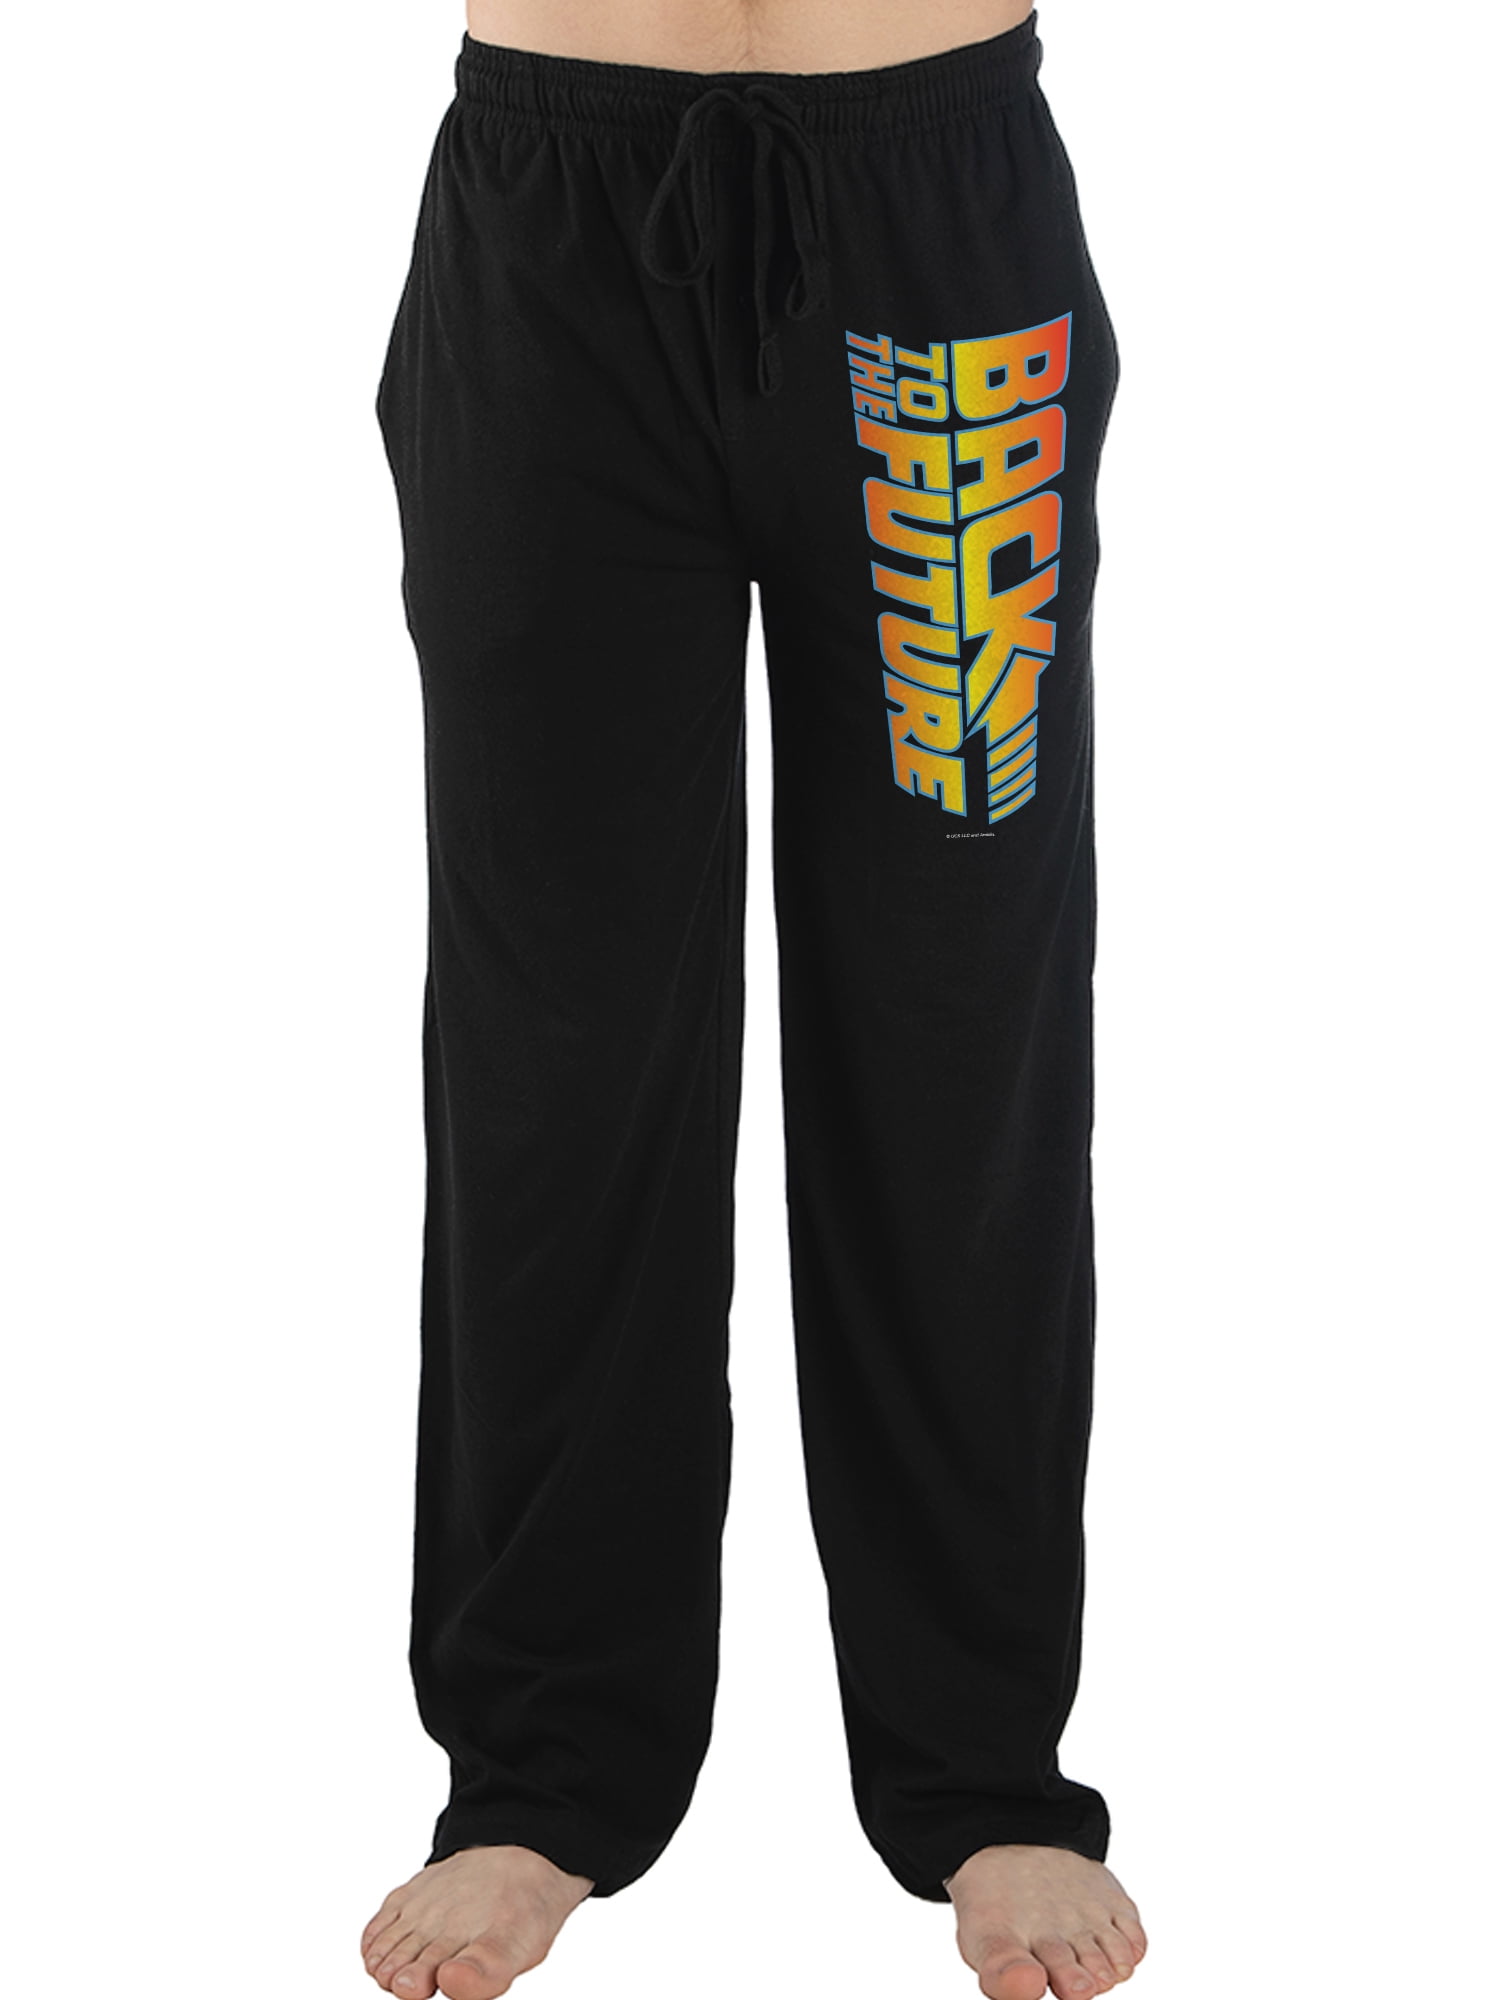 Back To The Future Men's Pajama Pant - Walmart.com